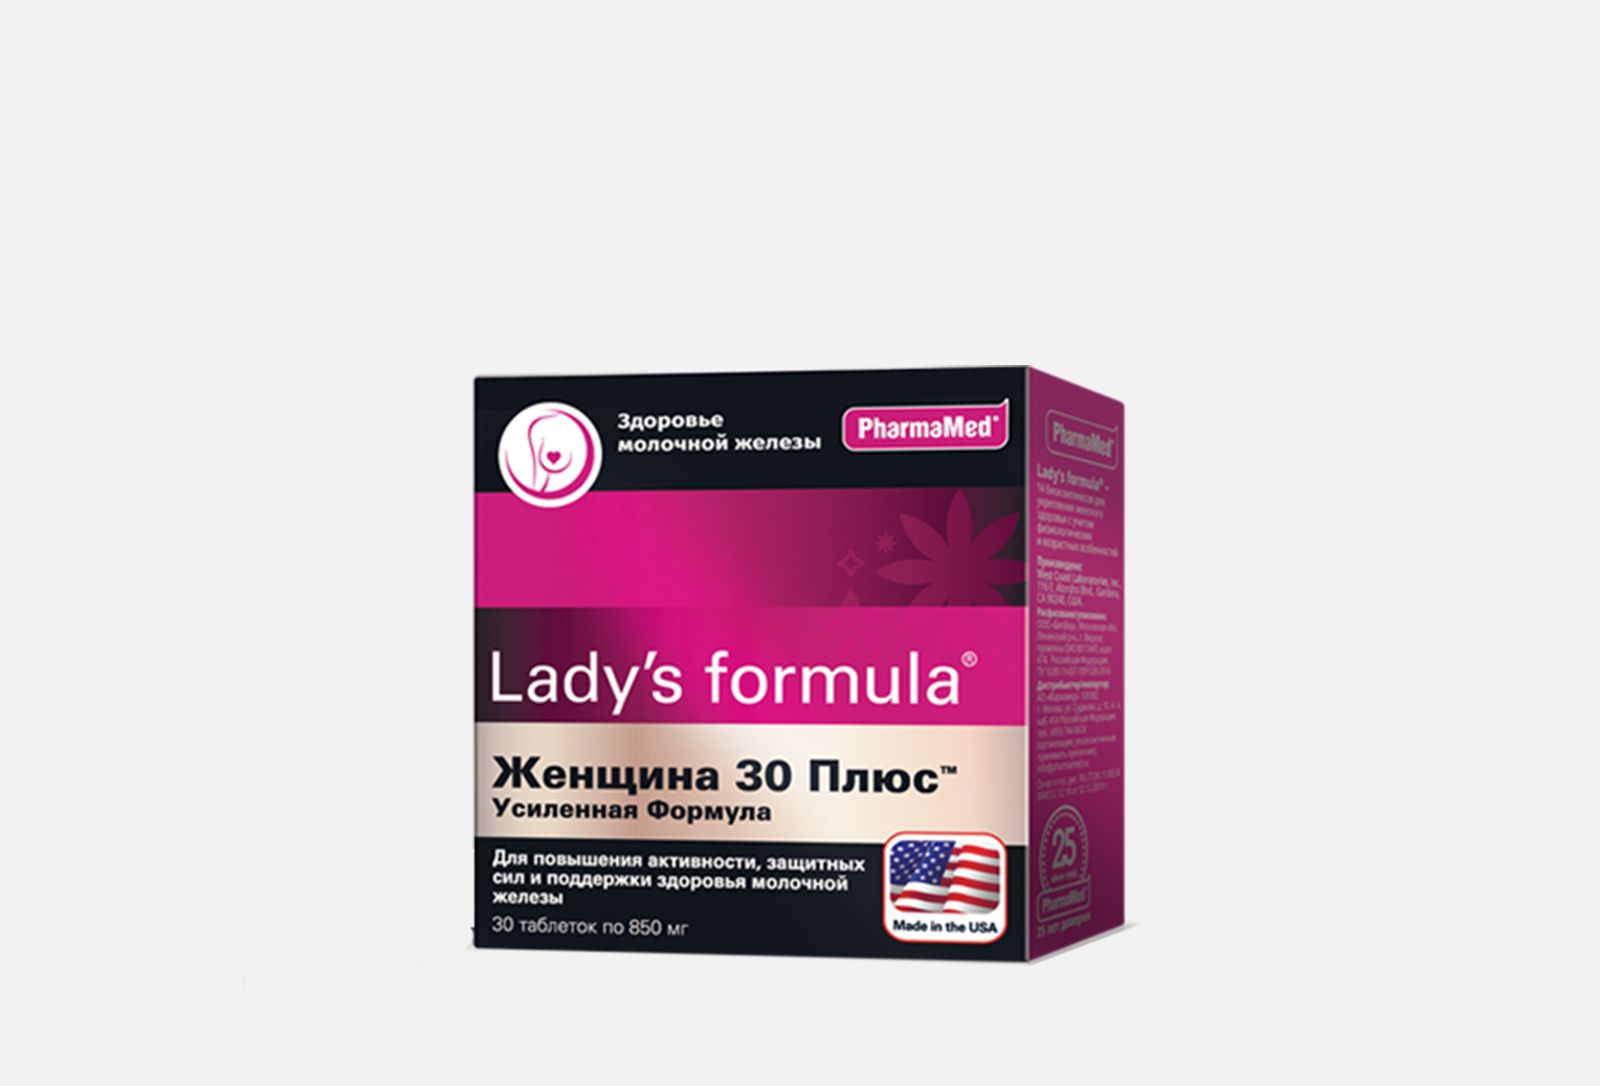 Lady formula 30. Lady's Formula (ледис формула). Леди формула 30 плюс усиленная. Lady's Formula усиленная формула. Леди-с формула менопауза усиленная формула таблетки 30.